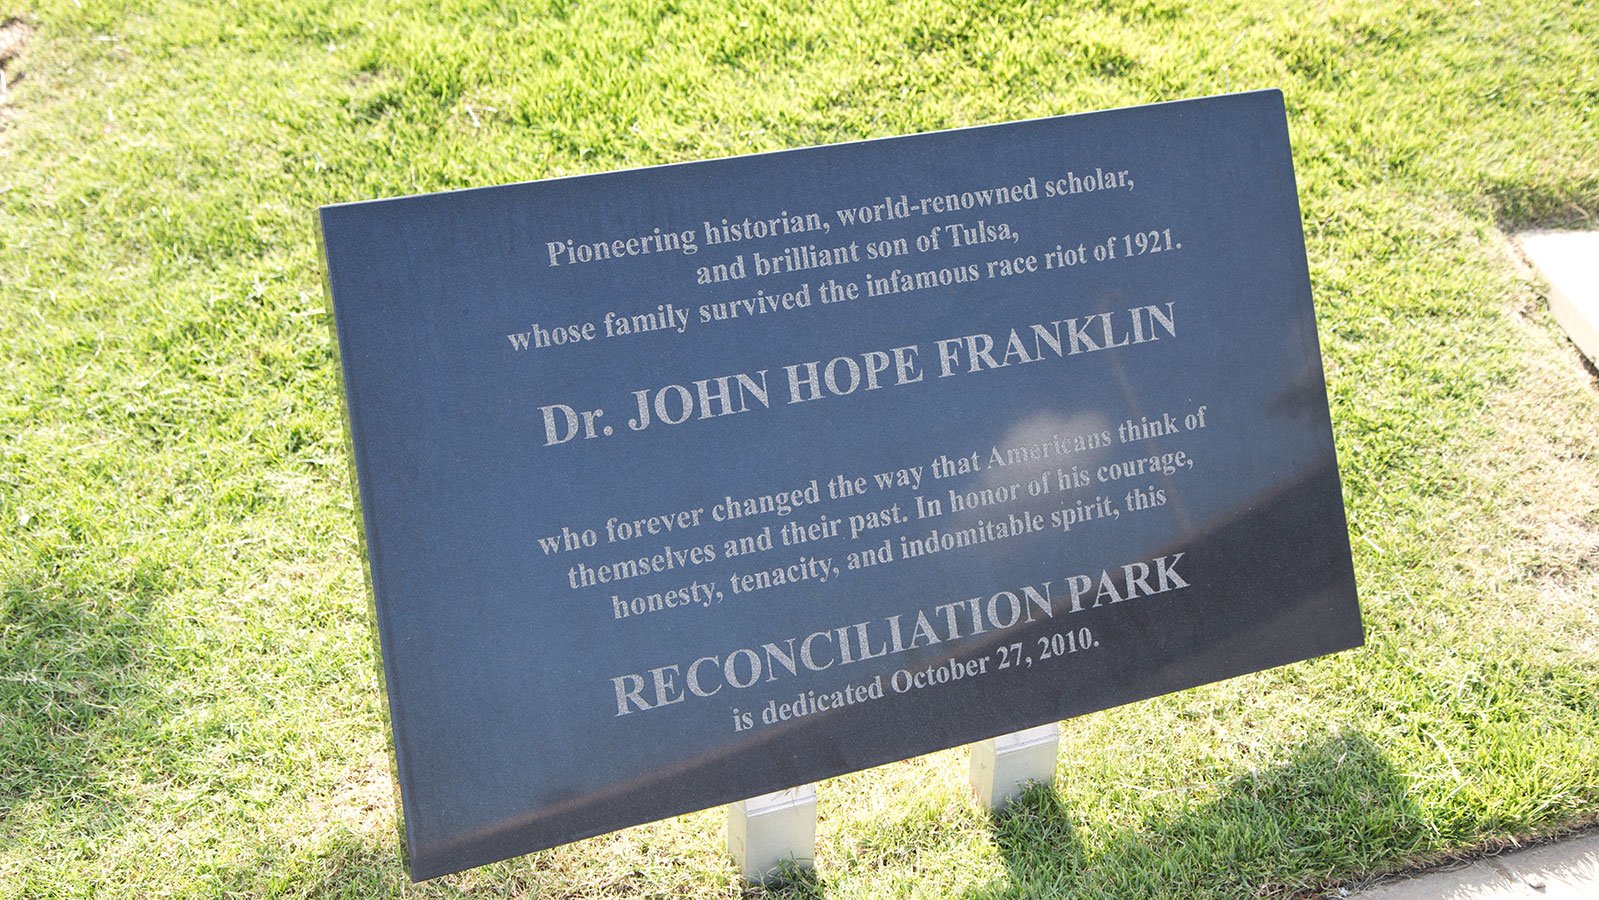 John Hope Franklin Reconciliation Park